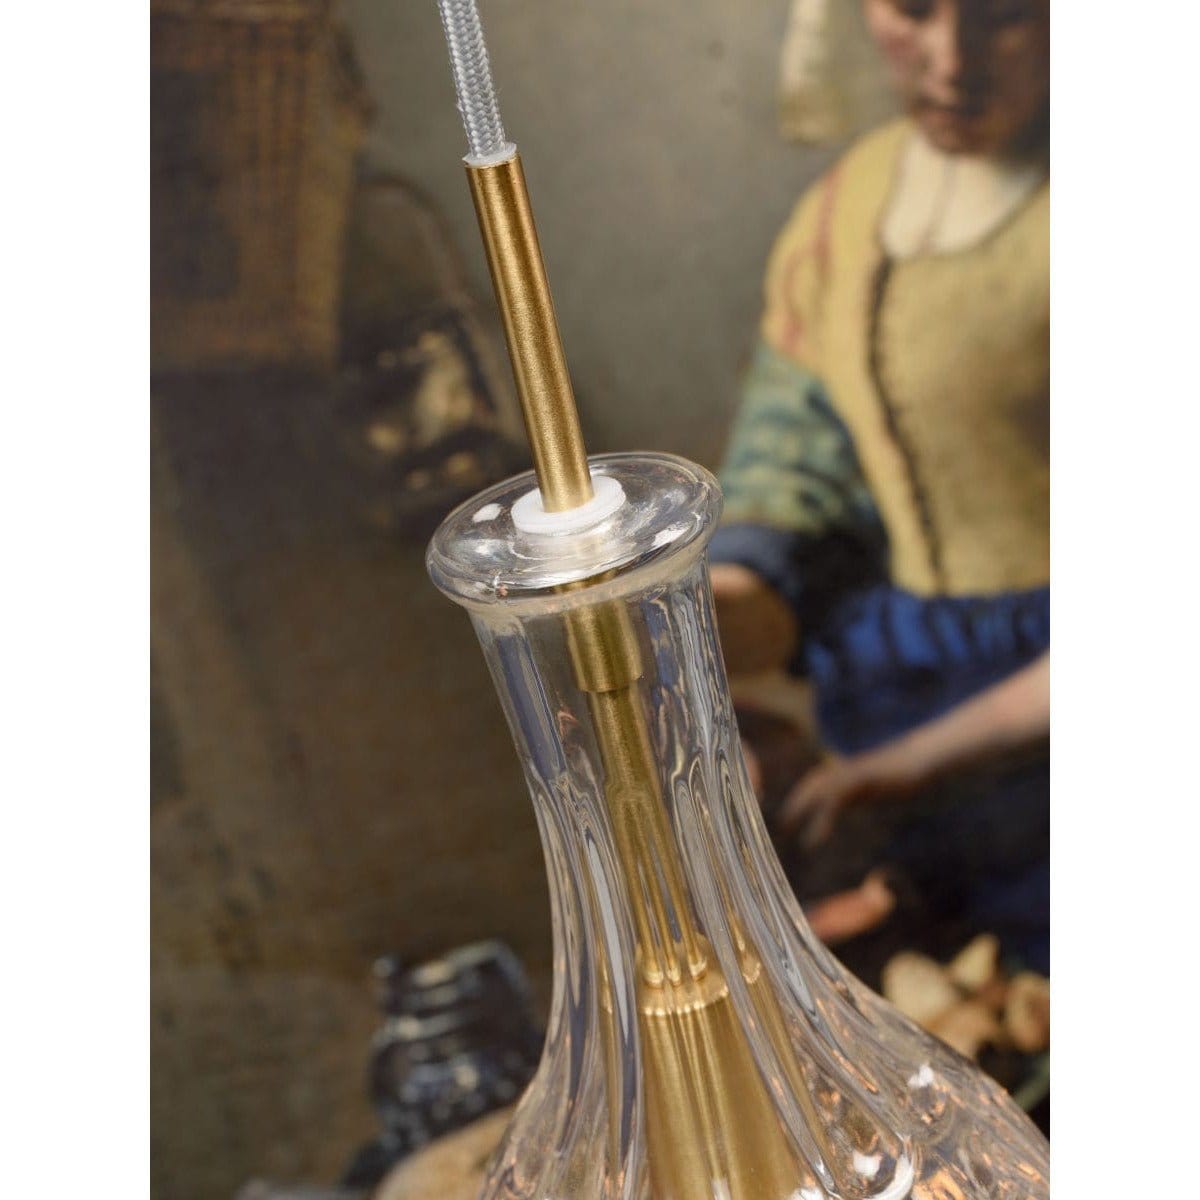 It's About RoMi Pendant lights Brussels Glass Pendant Light, bottle shaped